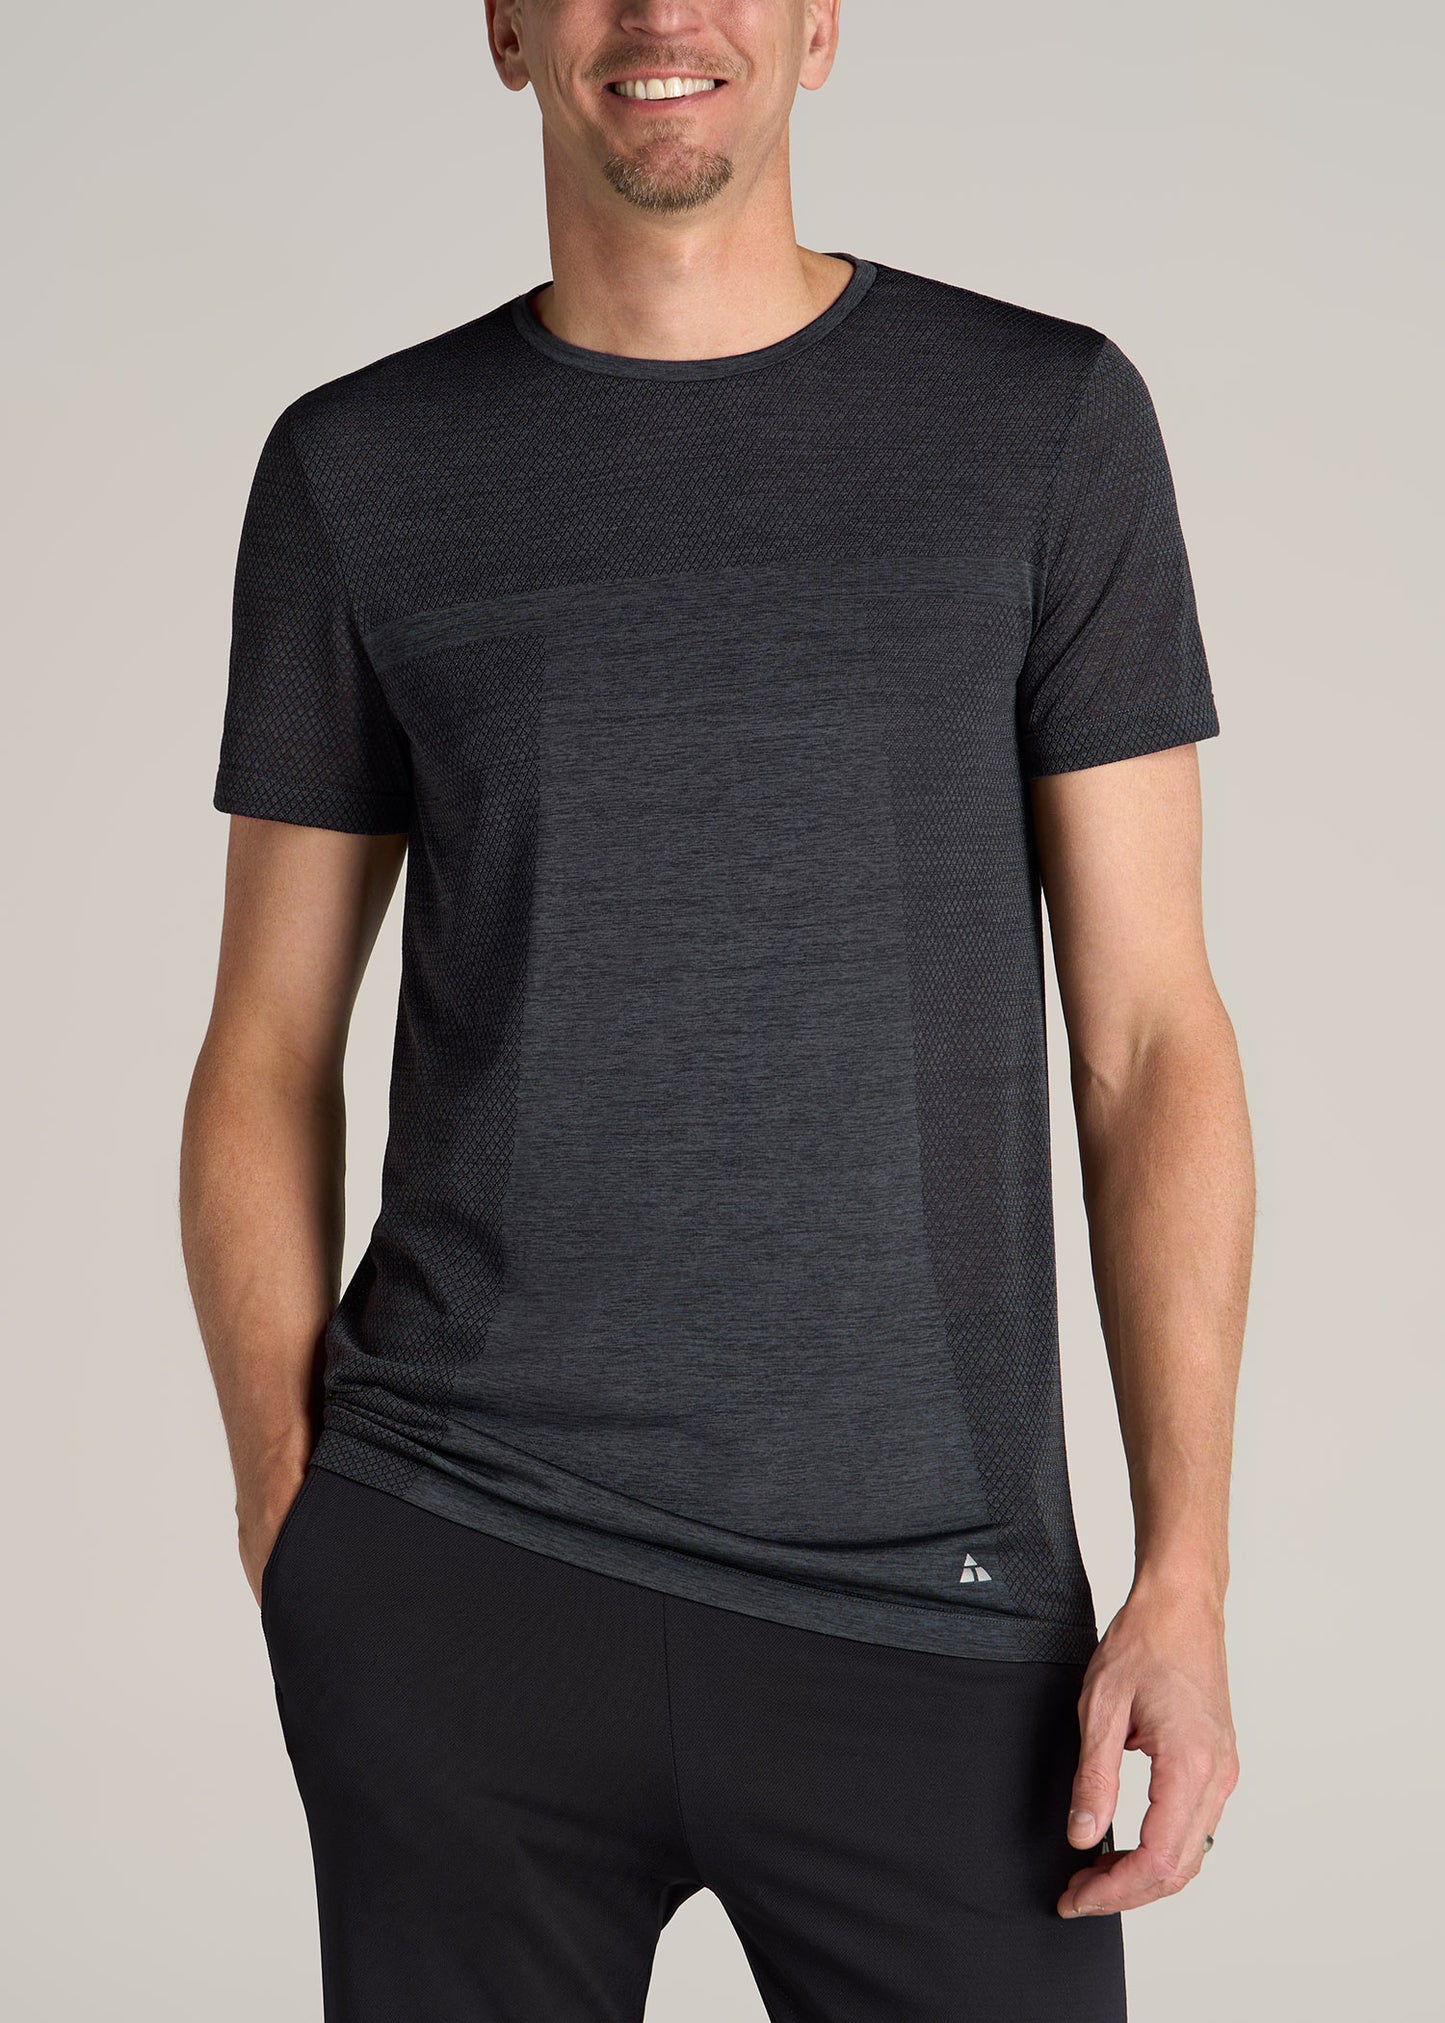 Athletic T-Shirt For Men